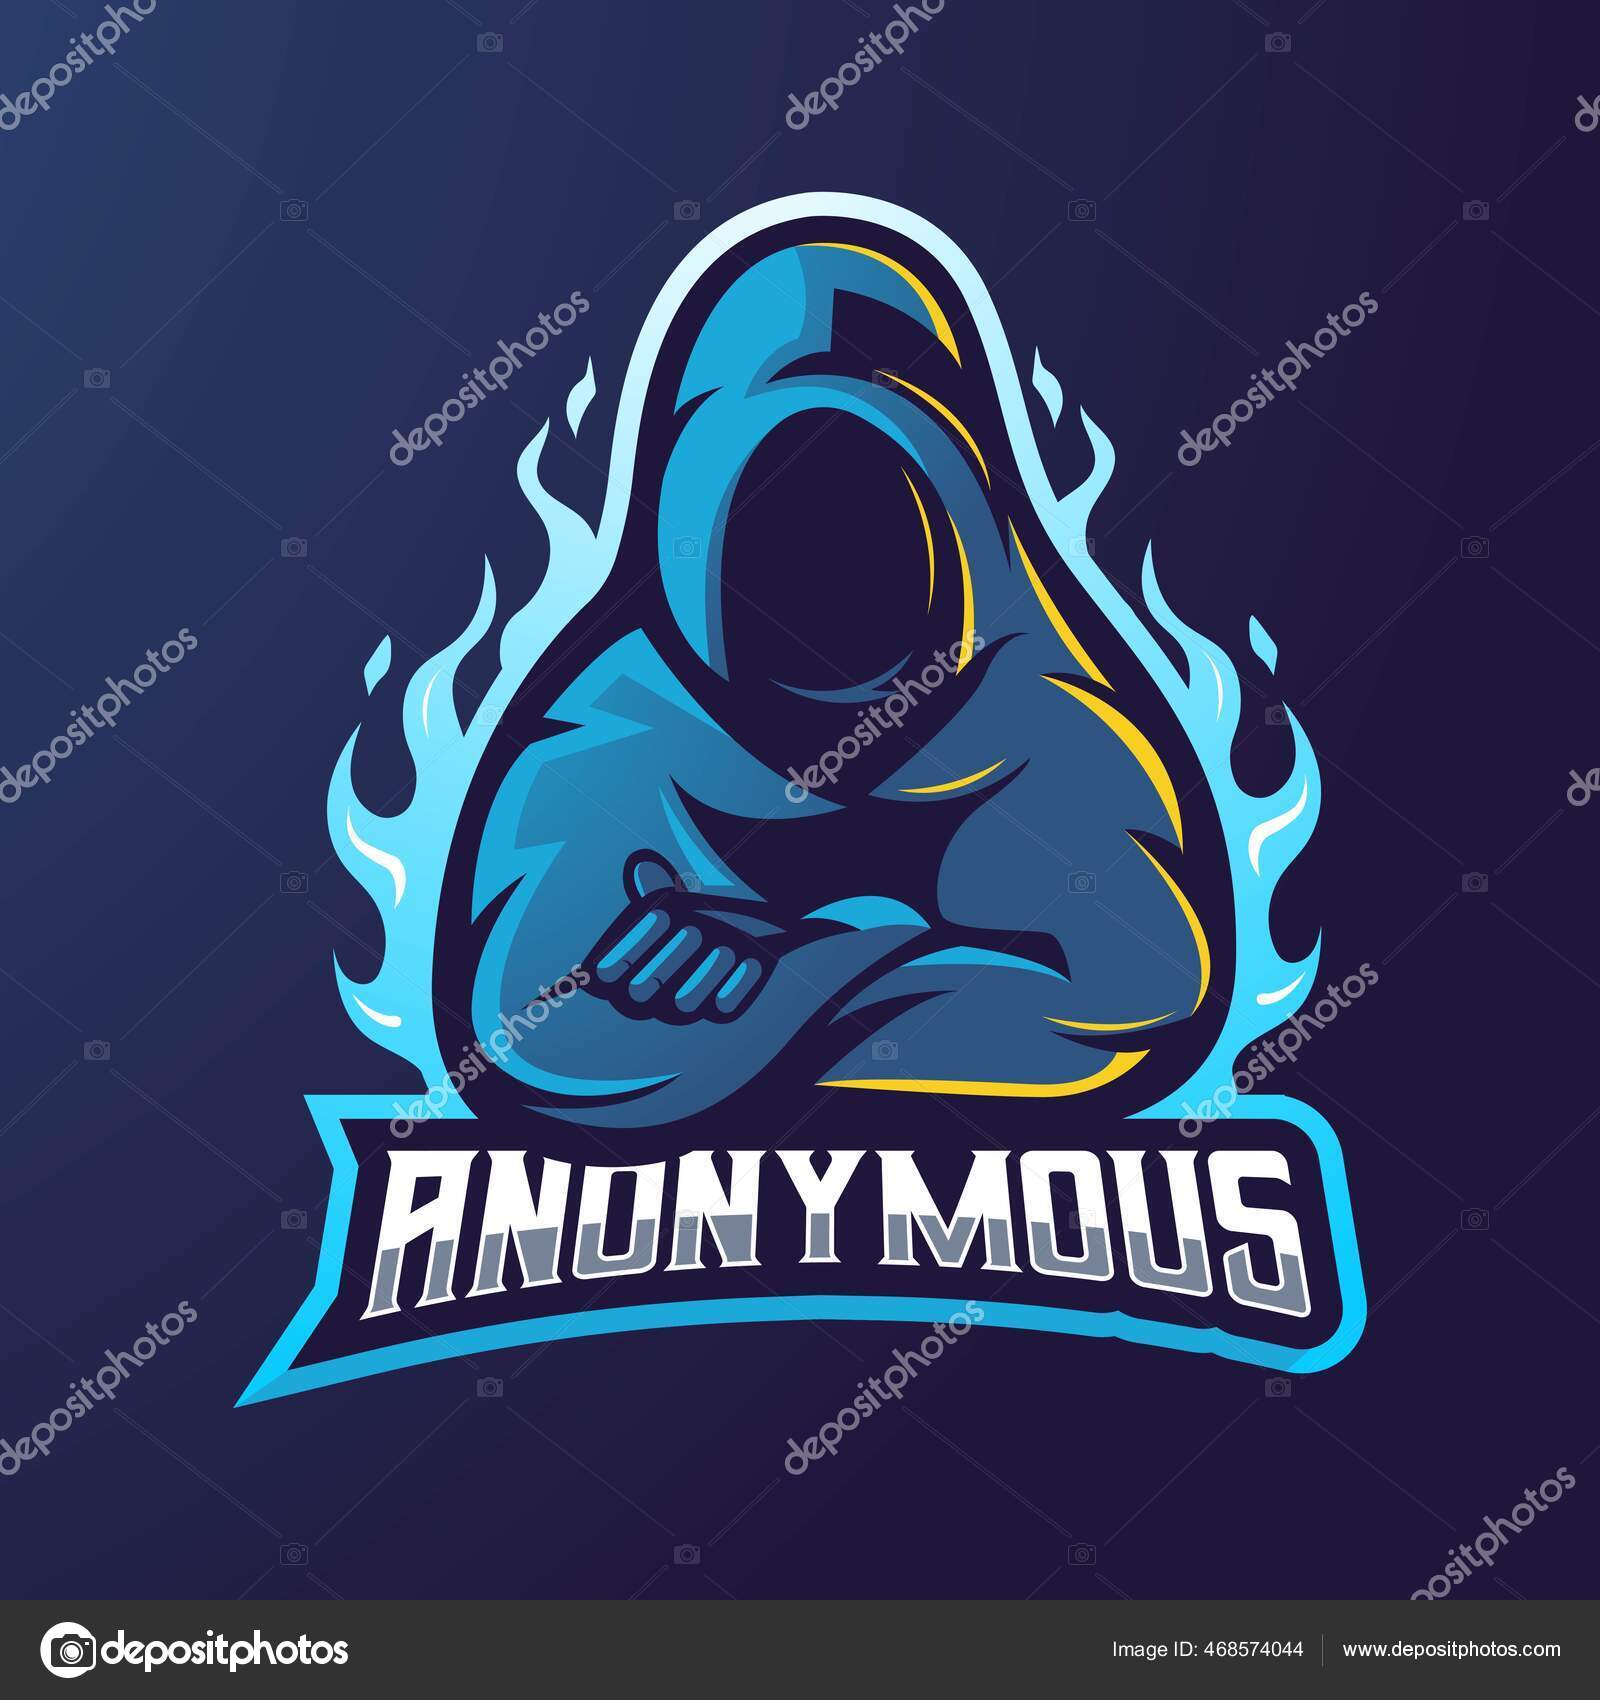 https://st2.depositphotos.com/50988222/46857/v/1600/depositphotos_468574044-stock-illustration-anonymous-mascot-logo-design-vector.jpg